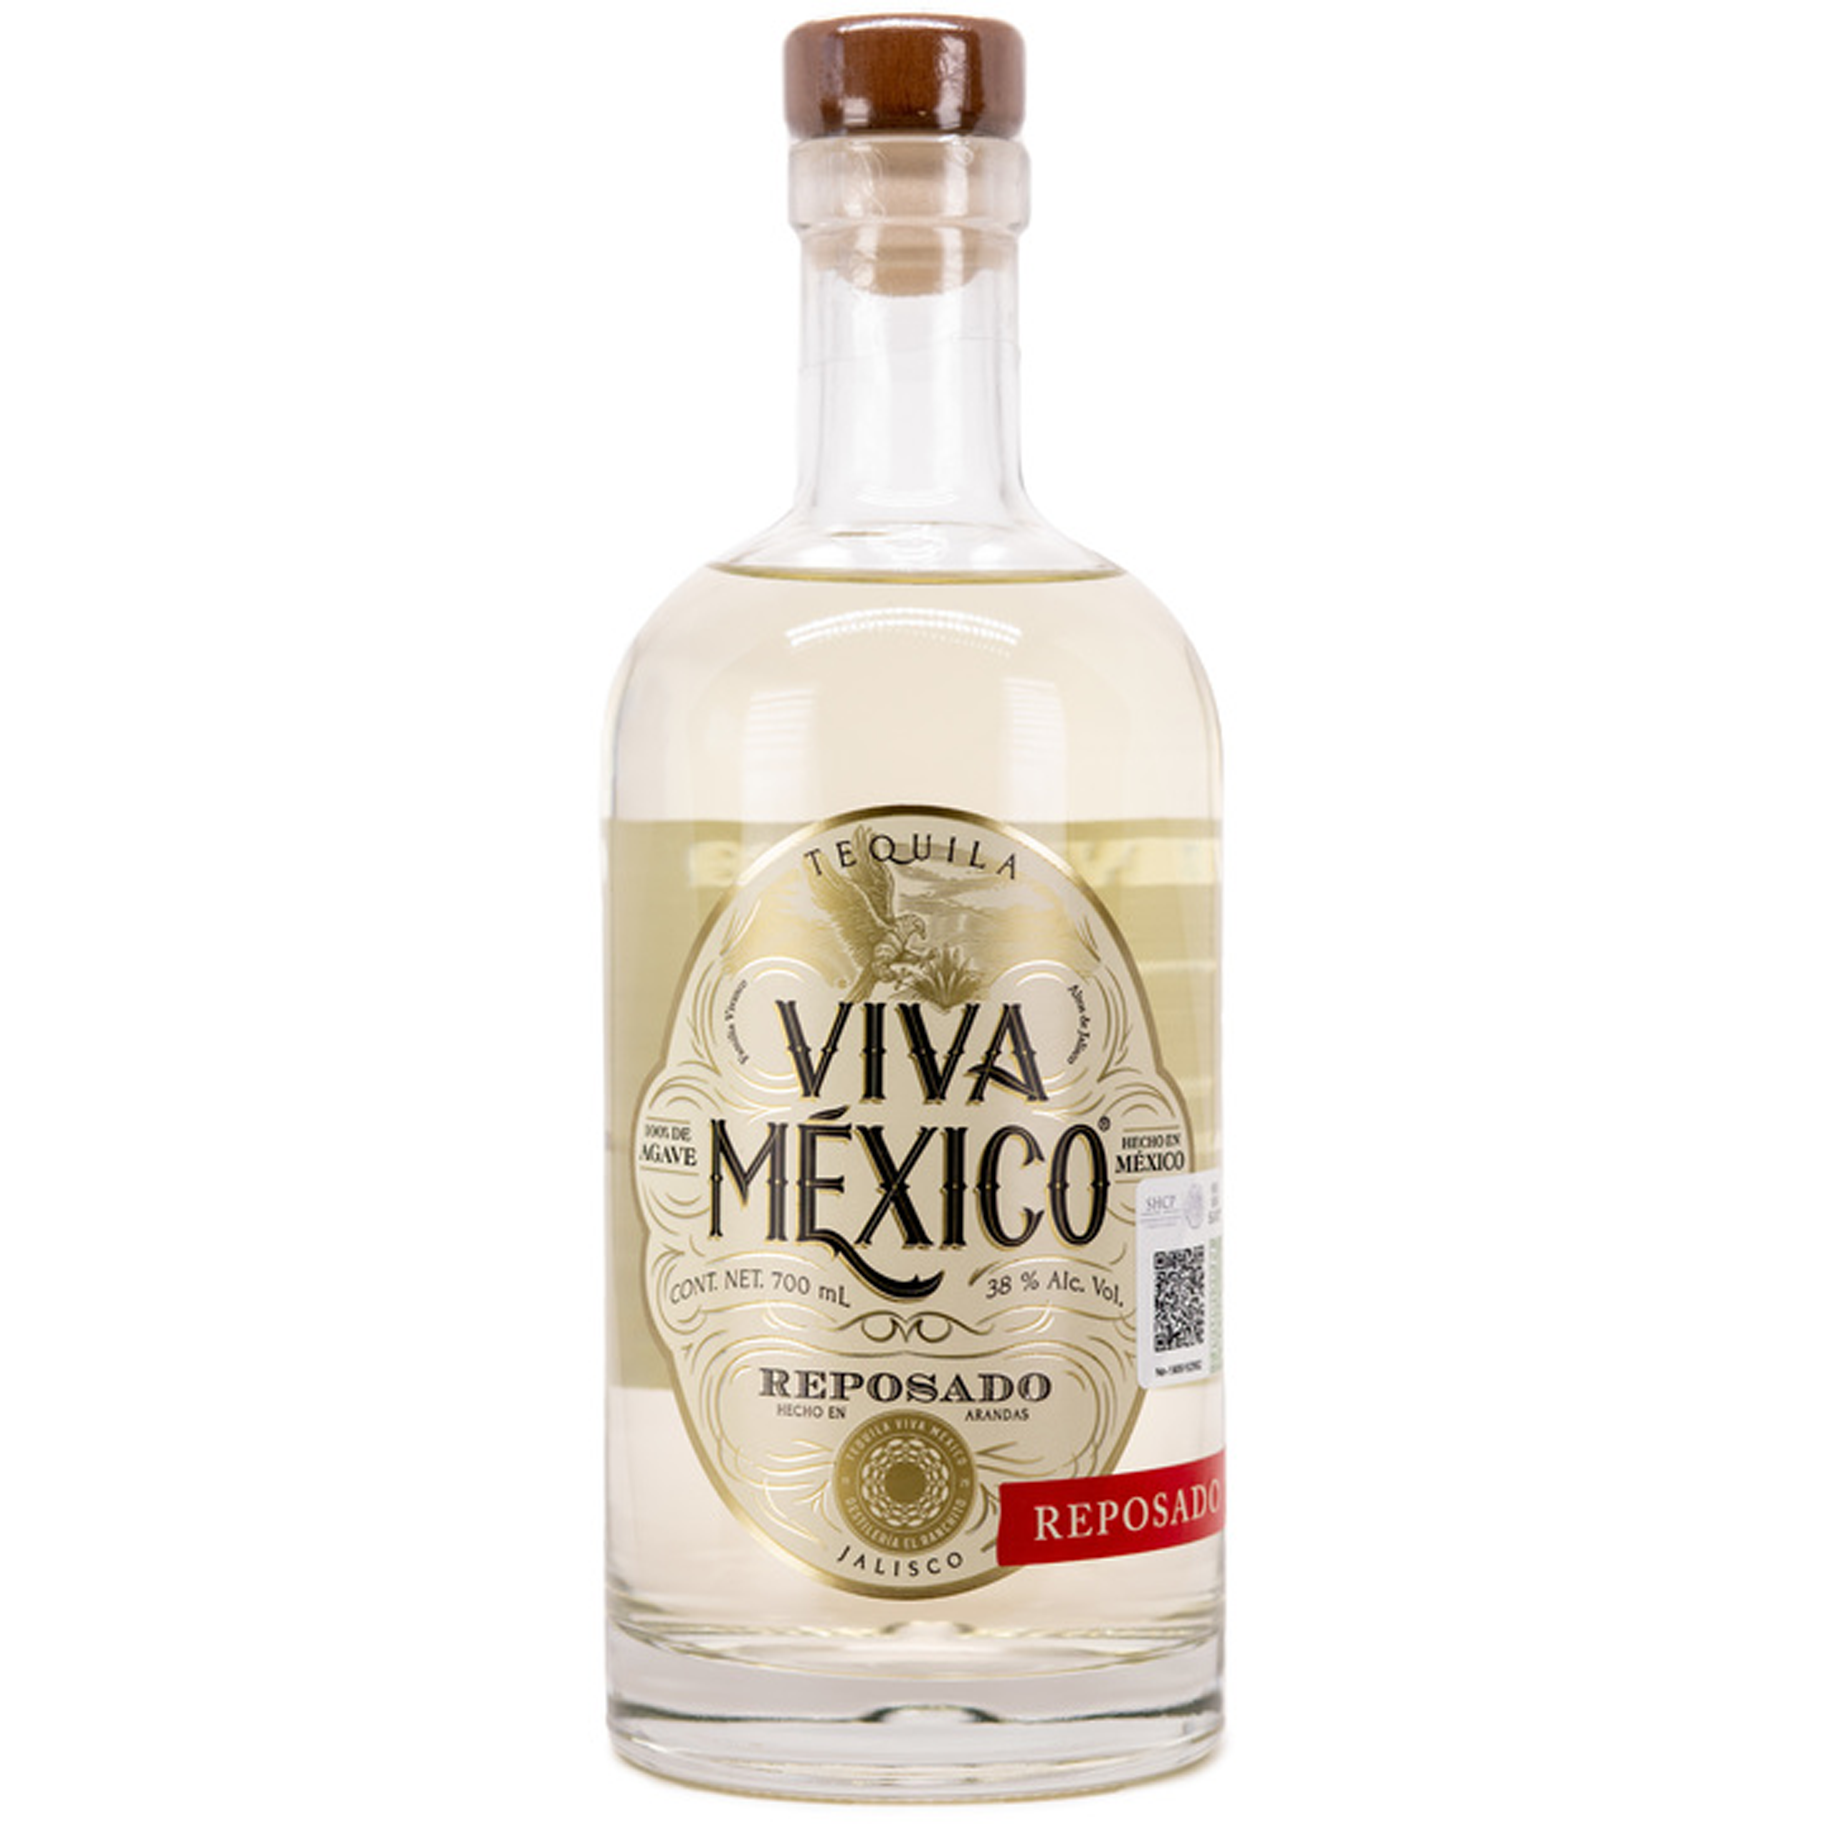 Viva Mexico Tequila - Reposado